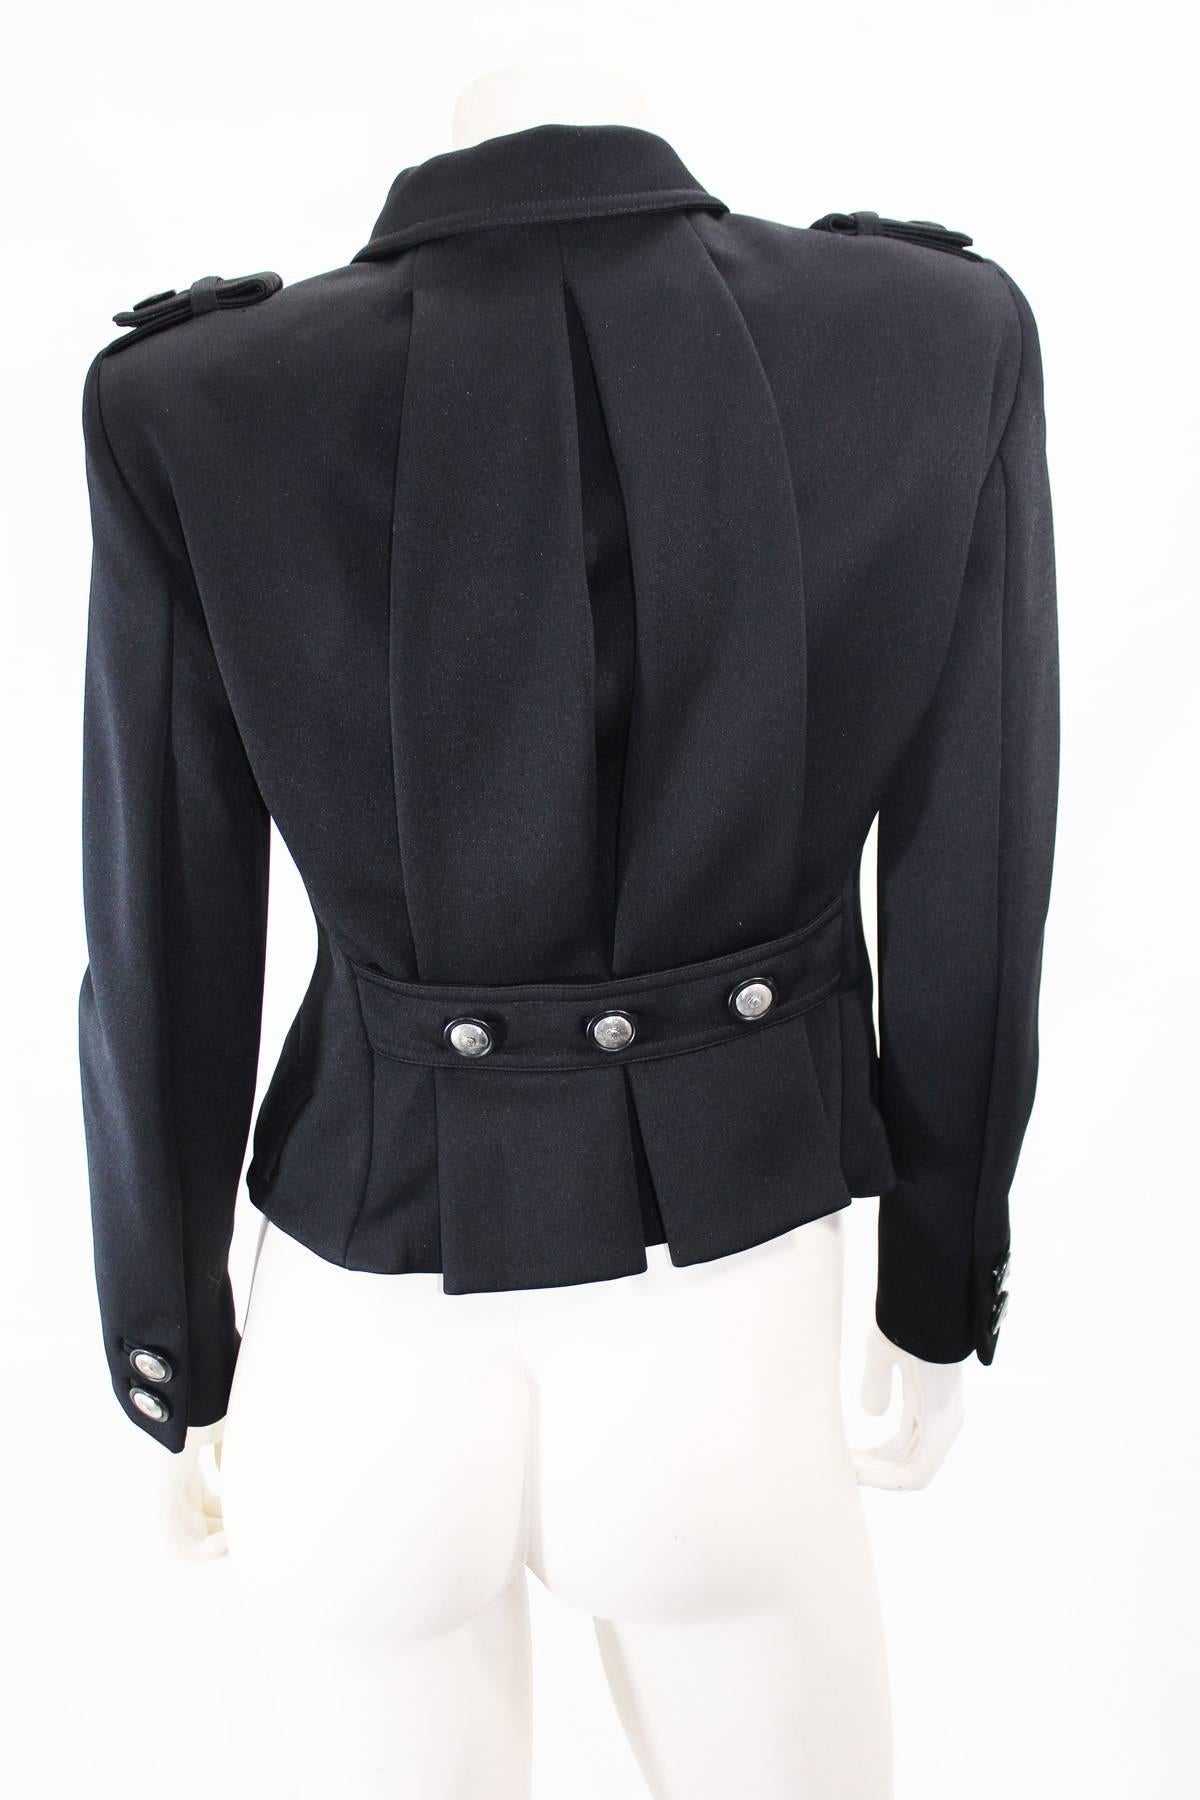 Gianni Versace  Couture  Vintage   Military Black Jacket Circa 1994 2